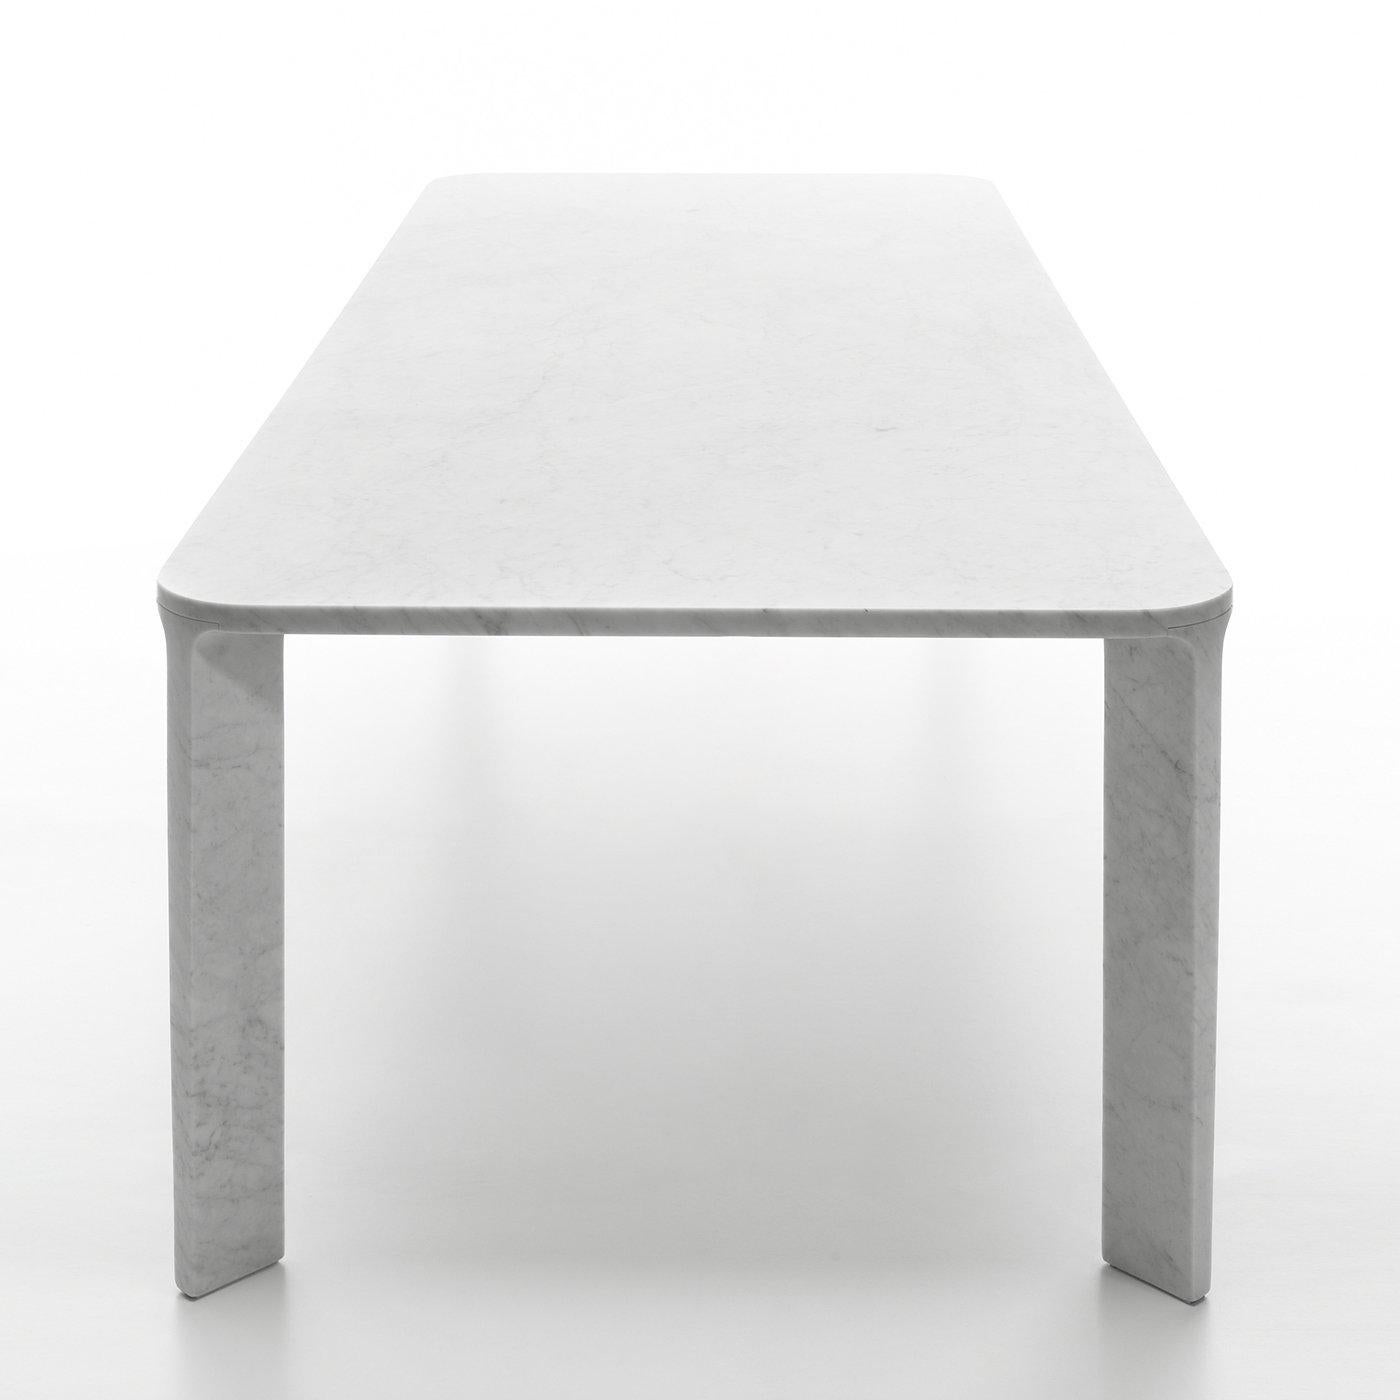 Esstisch, aus weißem Carrara-Marmor, matt poliert.